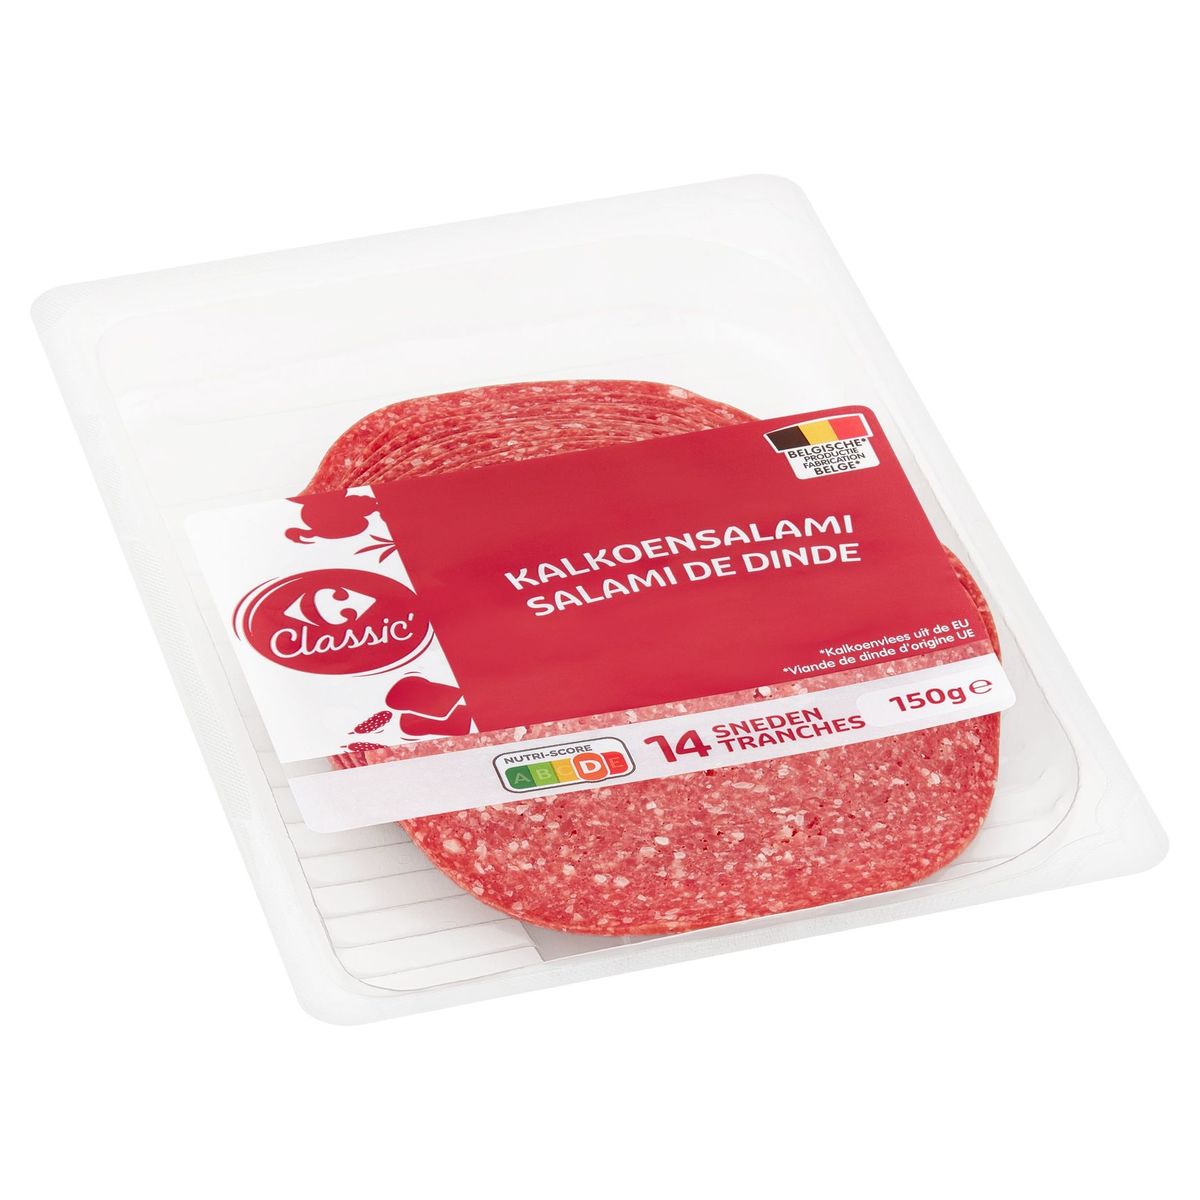 Carrefour Classic' Salami de Dinde 14 Tranches 150 g